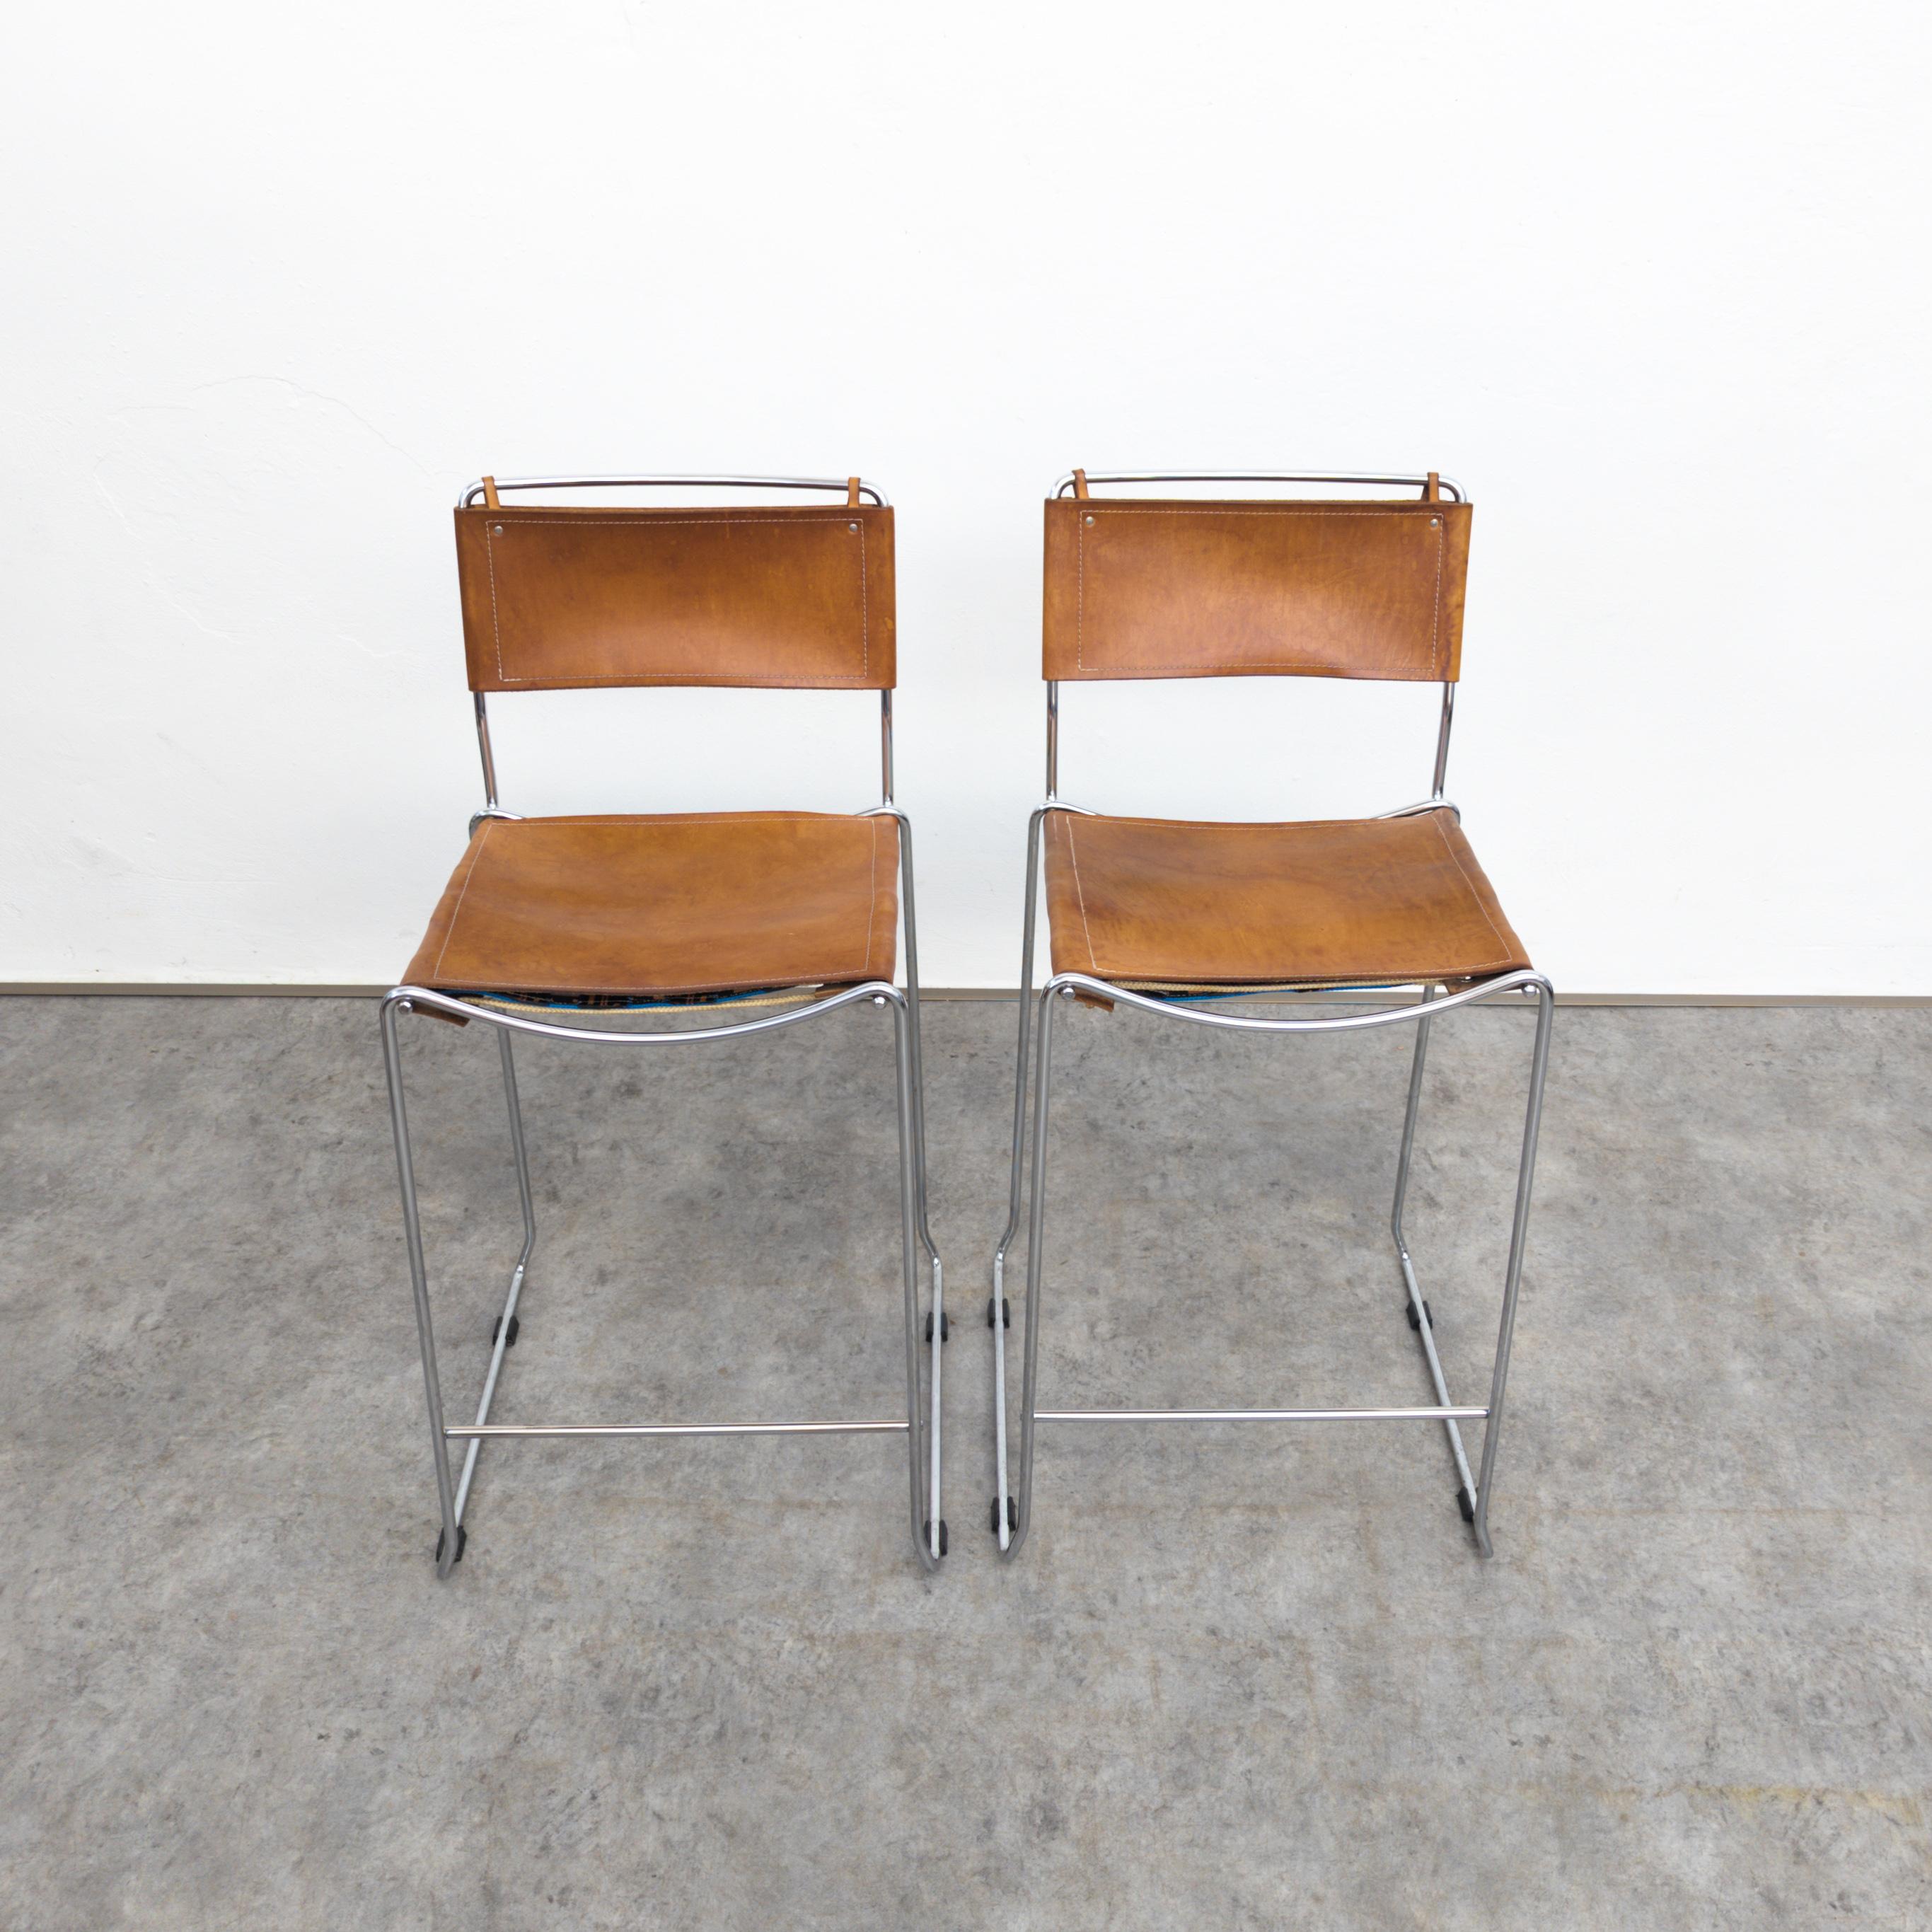 Steel Pair of vintage leather bar stools by Giandomenico Belotti for Alias, 1970s